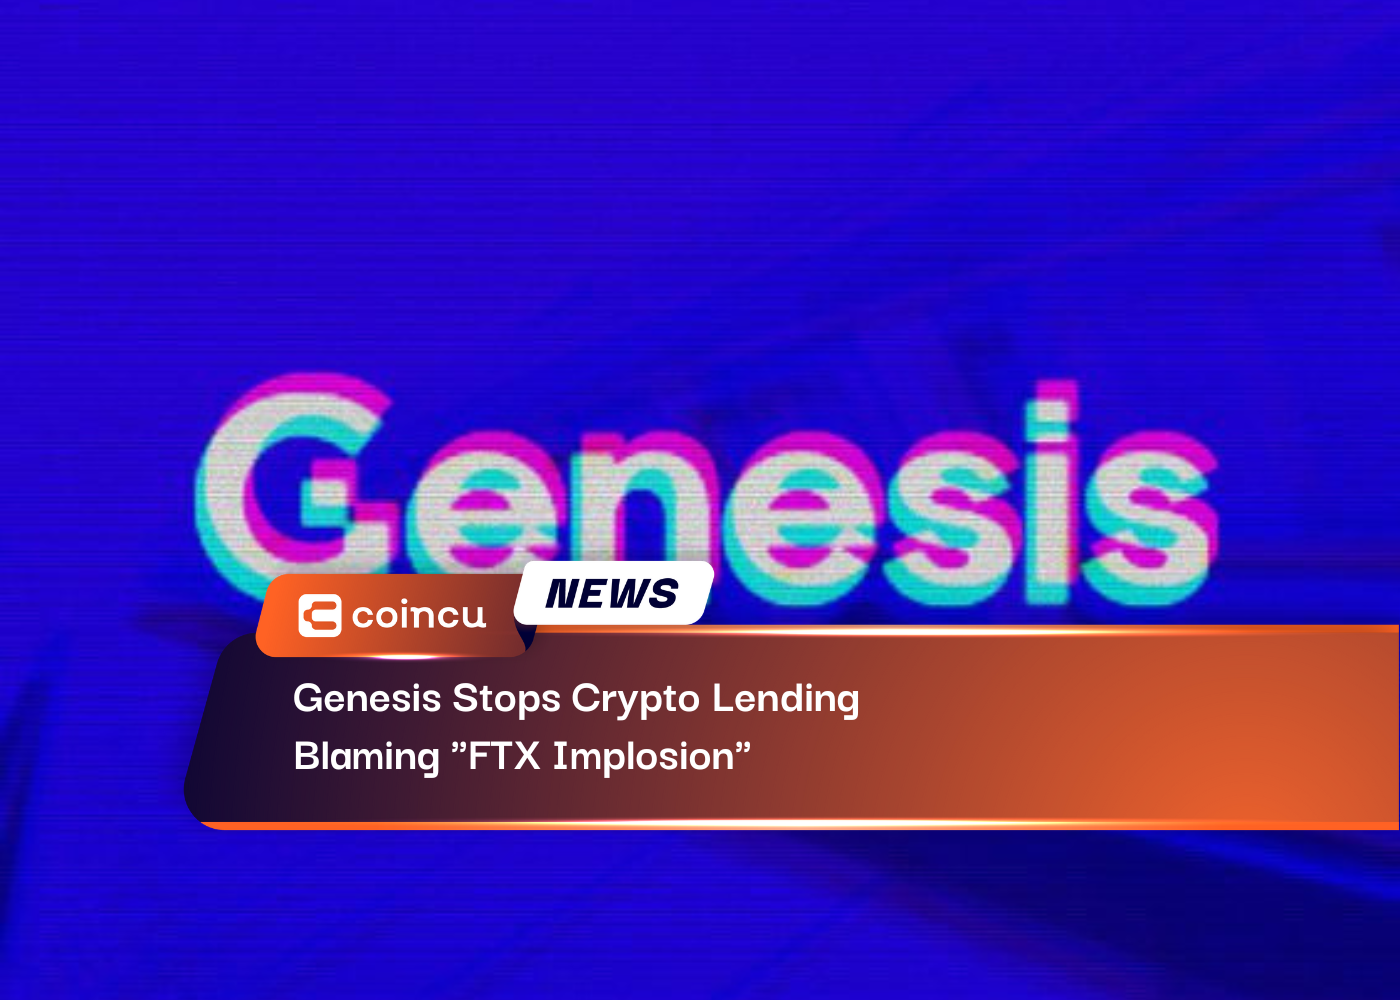 Genesis Stops Crypto Lending